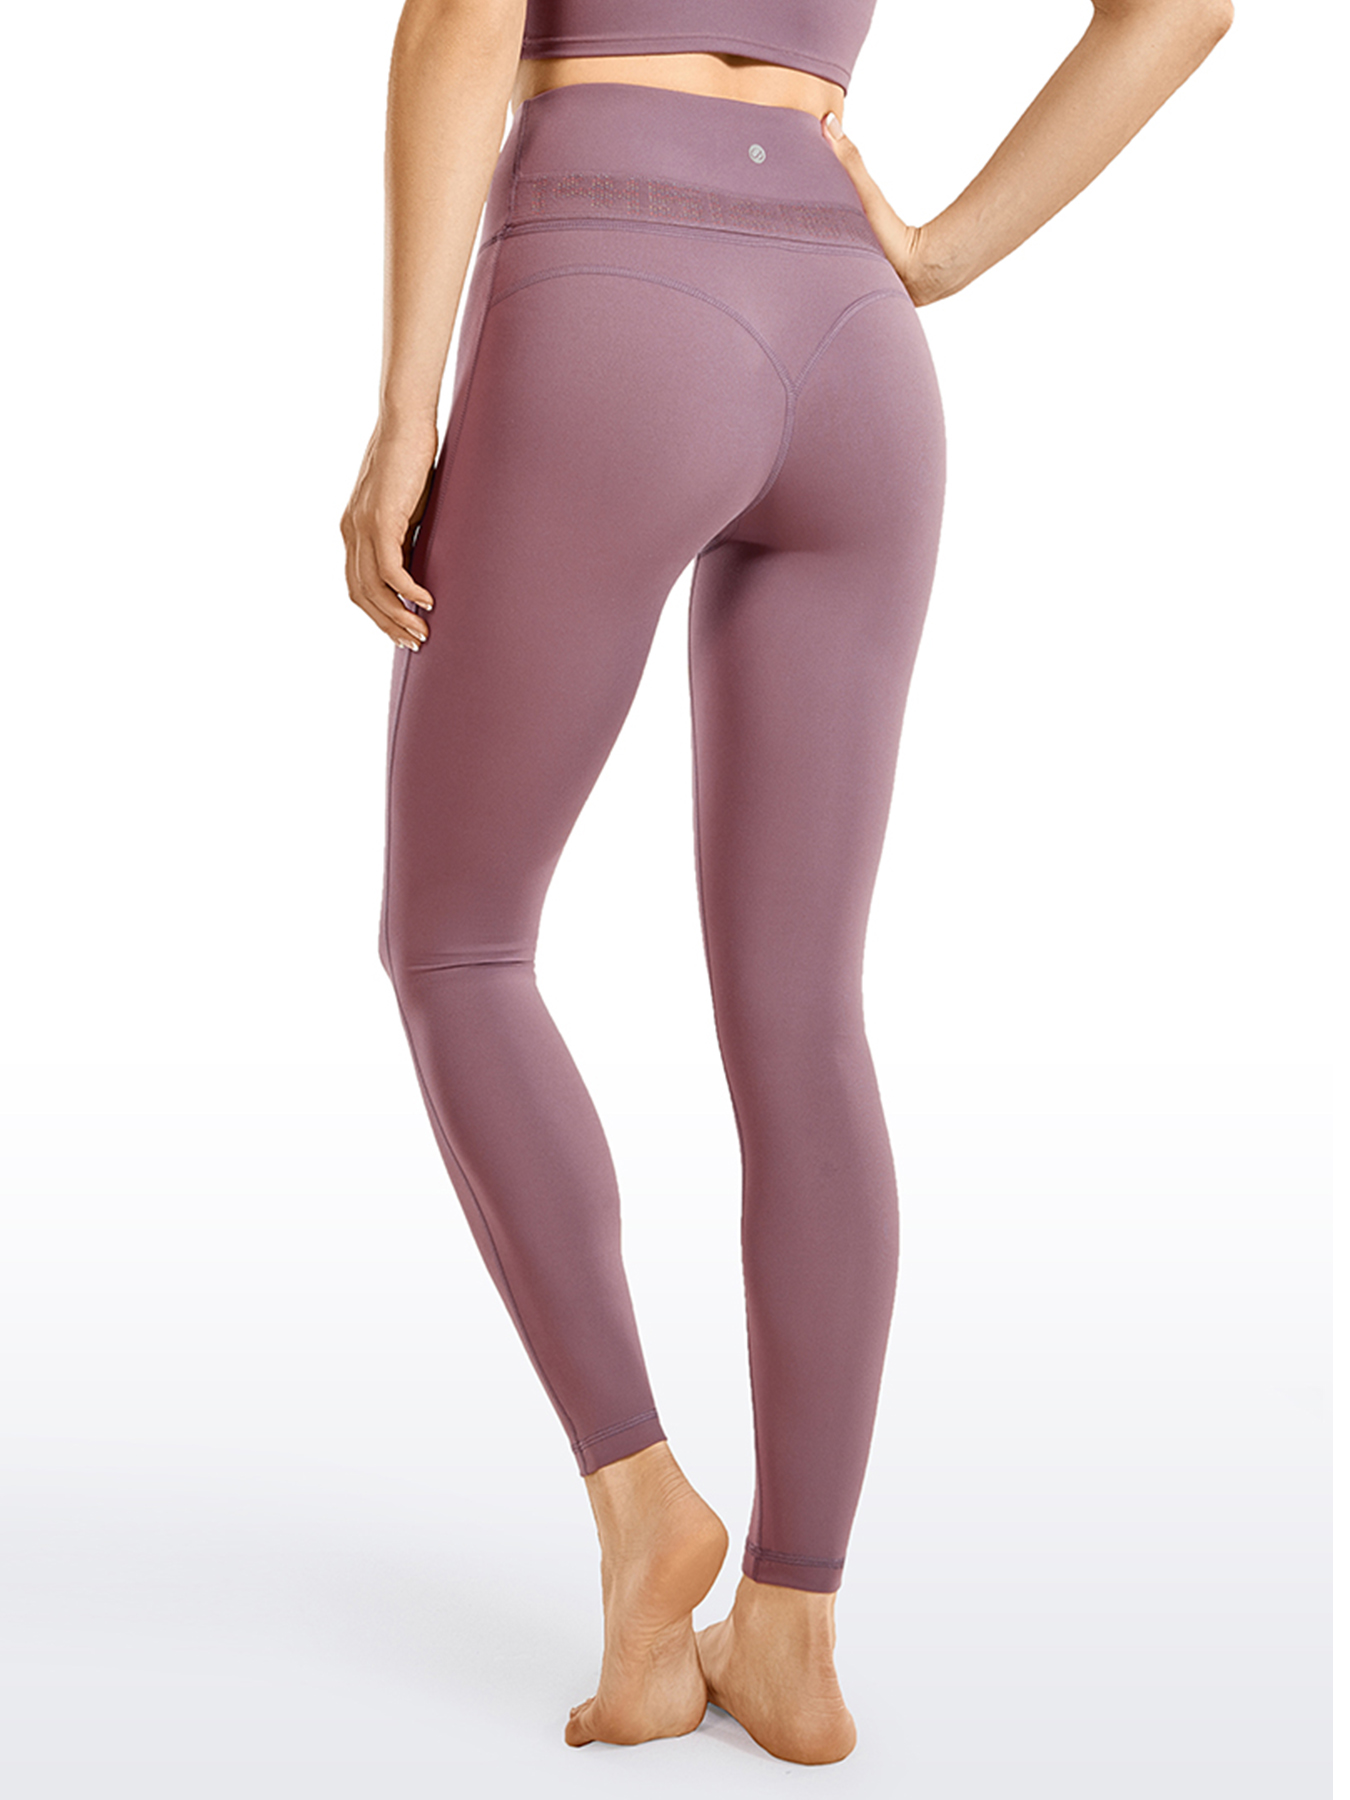 Mguotp Trousers Print Leggings Casual High Waist Sports Trouser Elasticity  Yoga Girls' Pants Yoga Pants Petite Large, Purple, Medium : :  Clothing, Shoes & Accessories